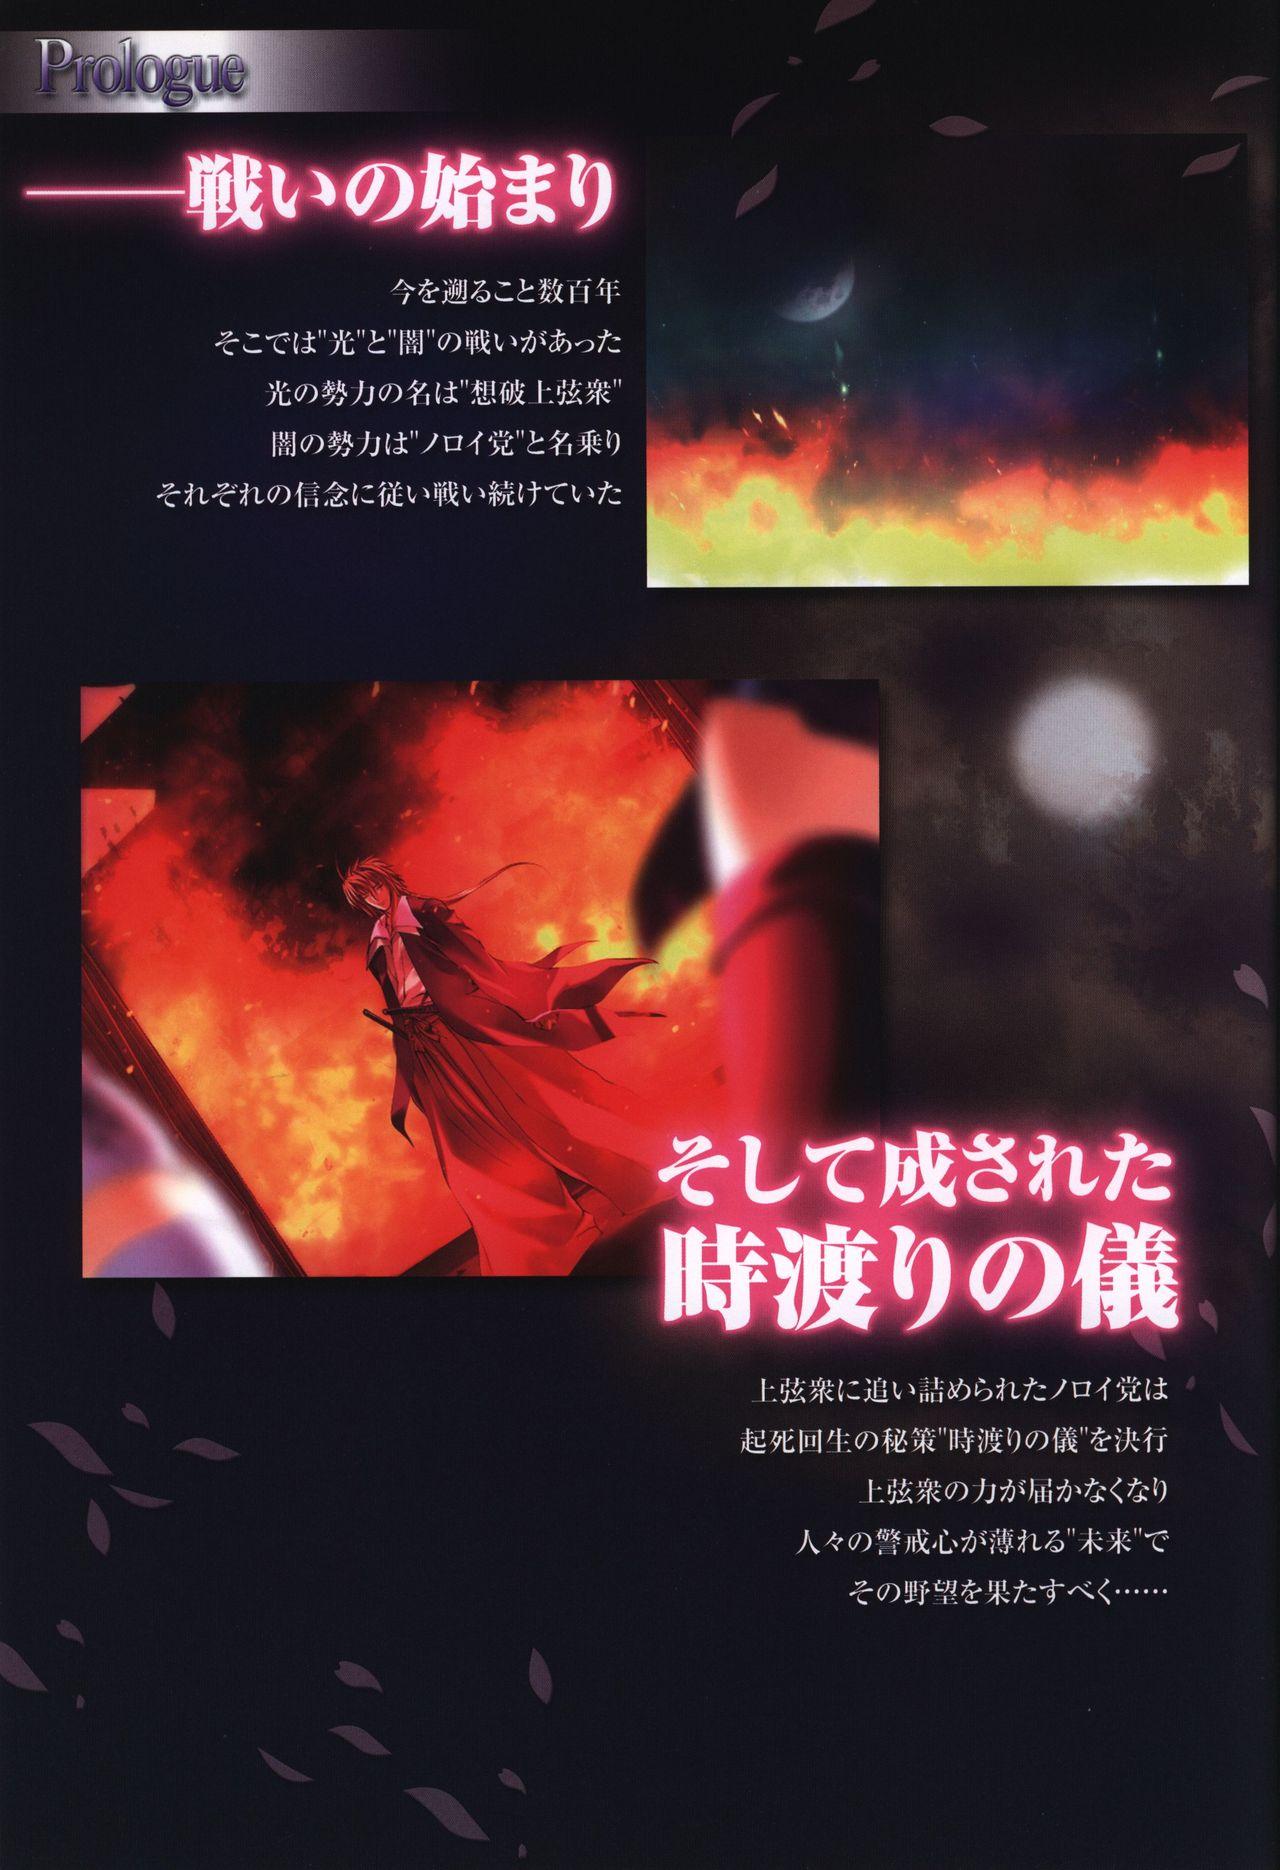 Extreme Choukou Sennin Haruka visual fanbook - Beat blades haruka Star - Page 4